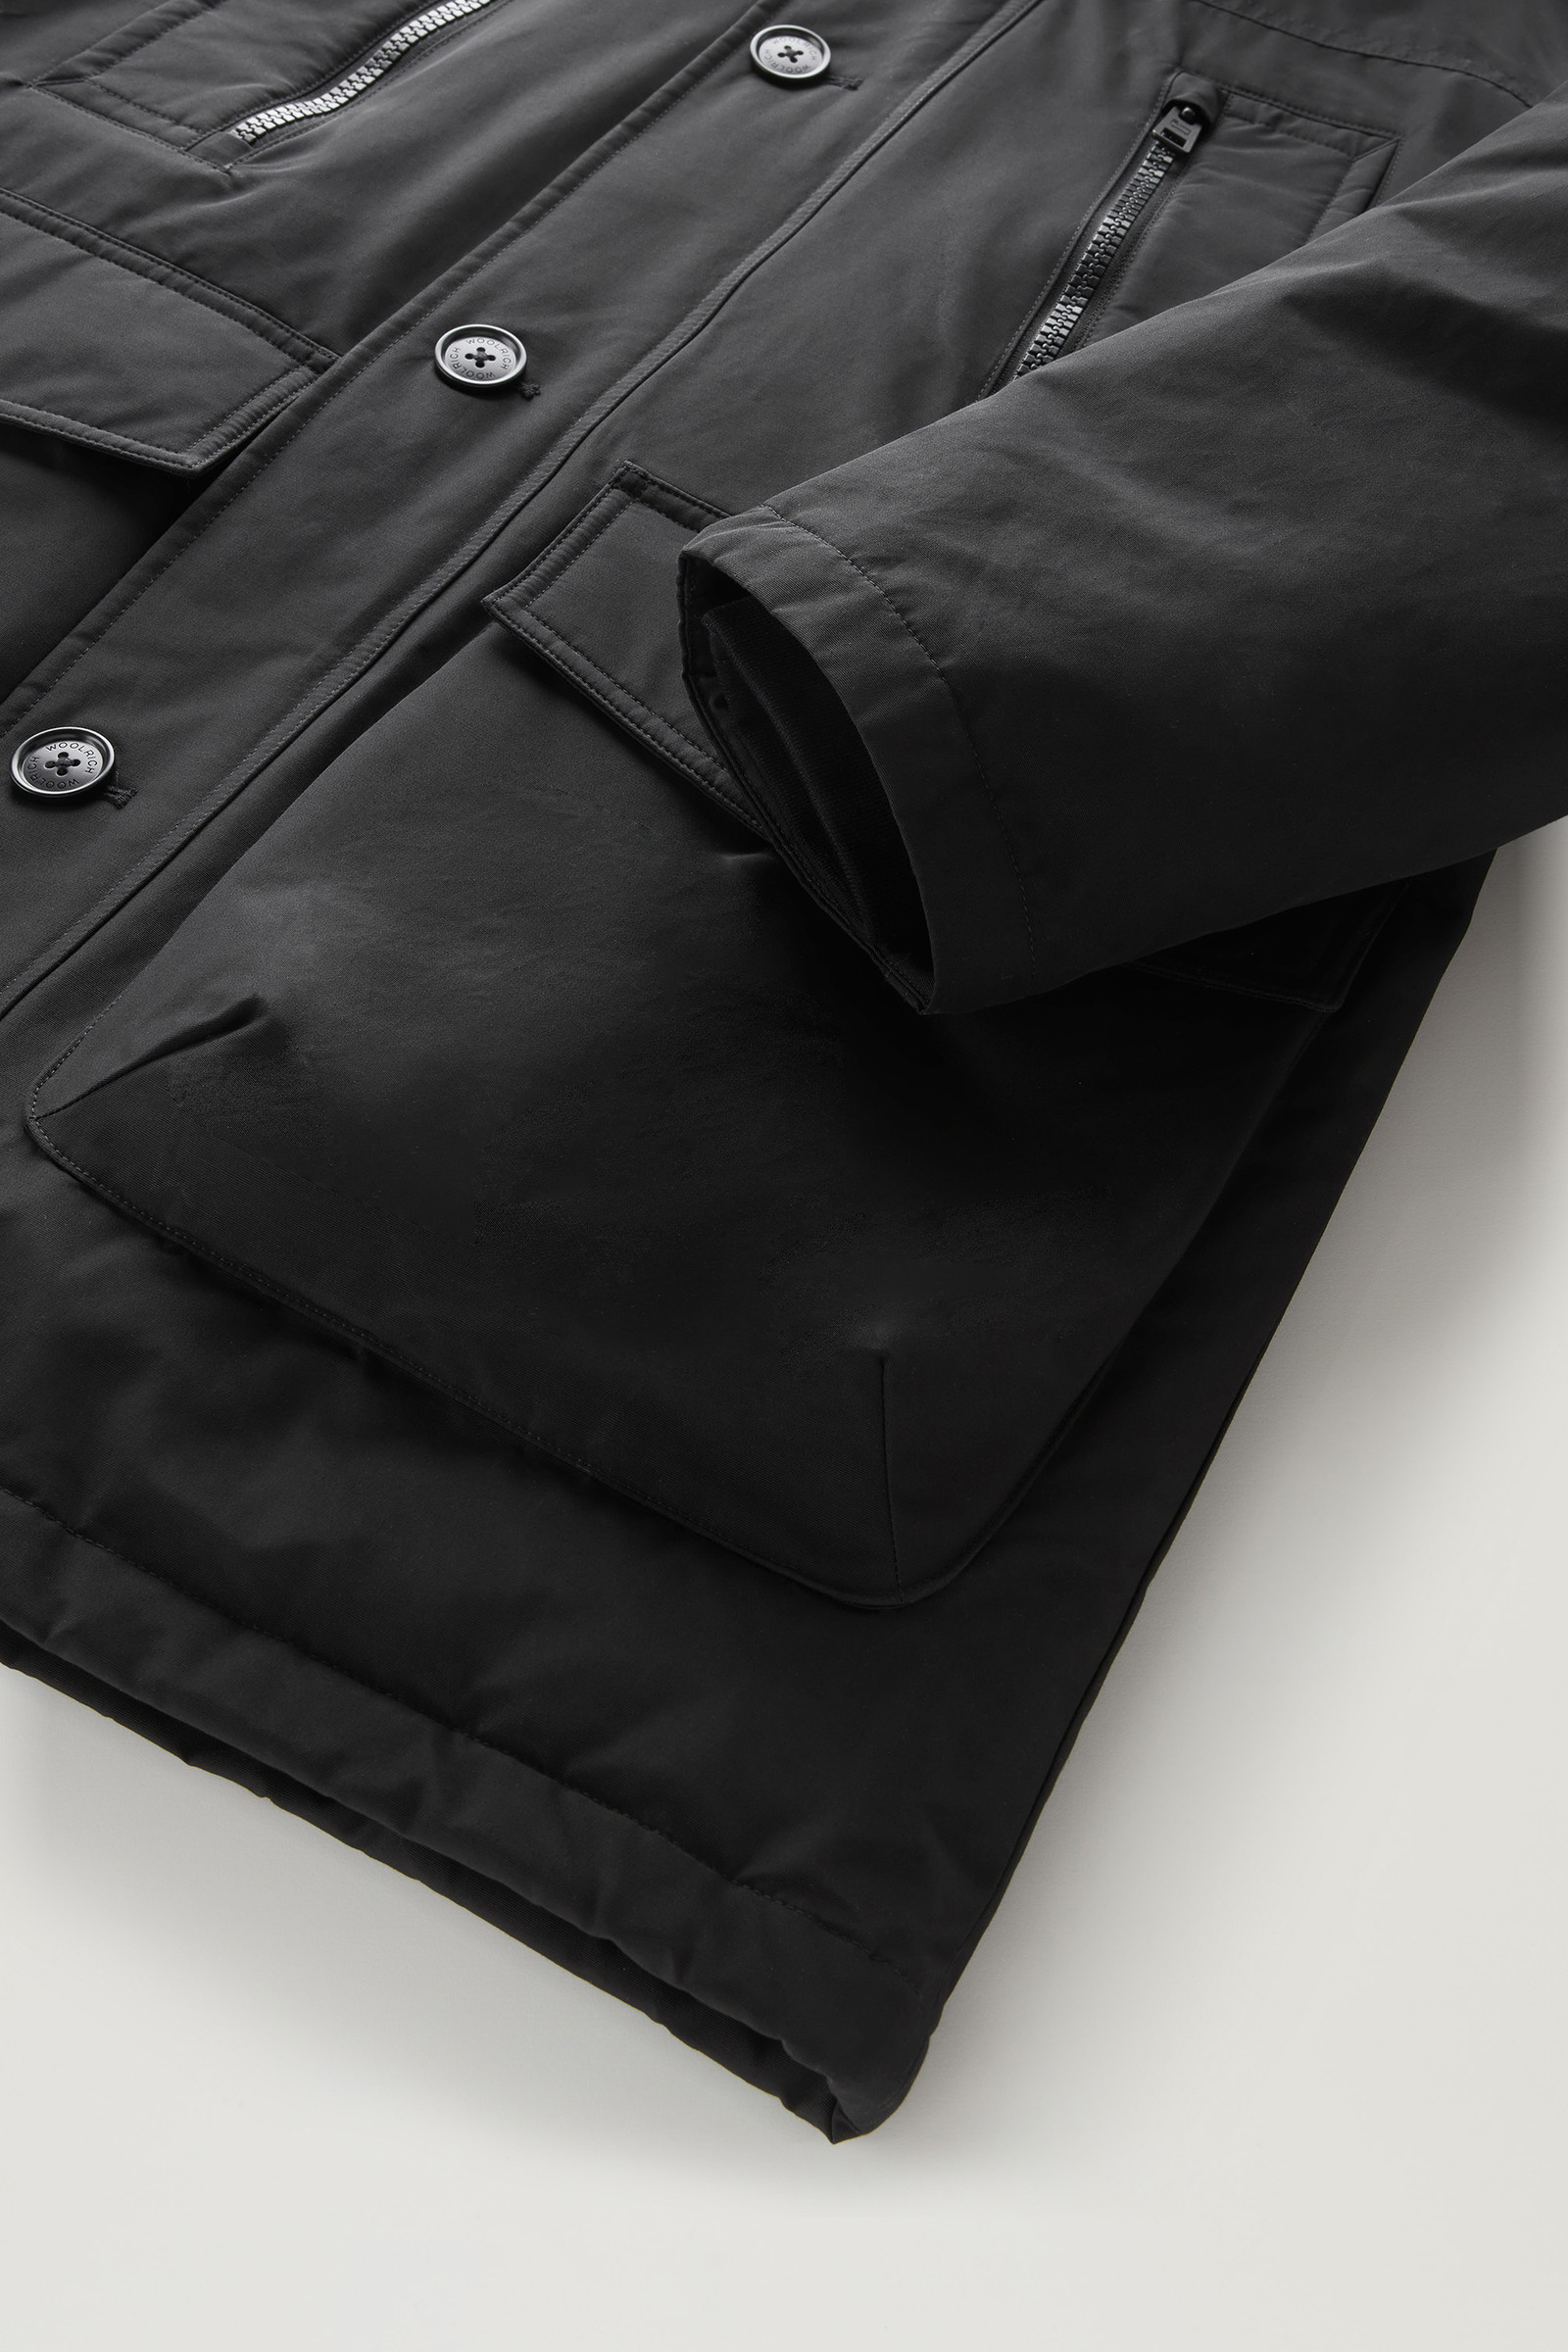 Men's Arctic Parka Evolution in Ramar Cloth Black | Woolrich USA